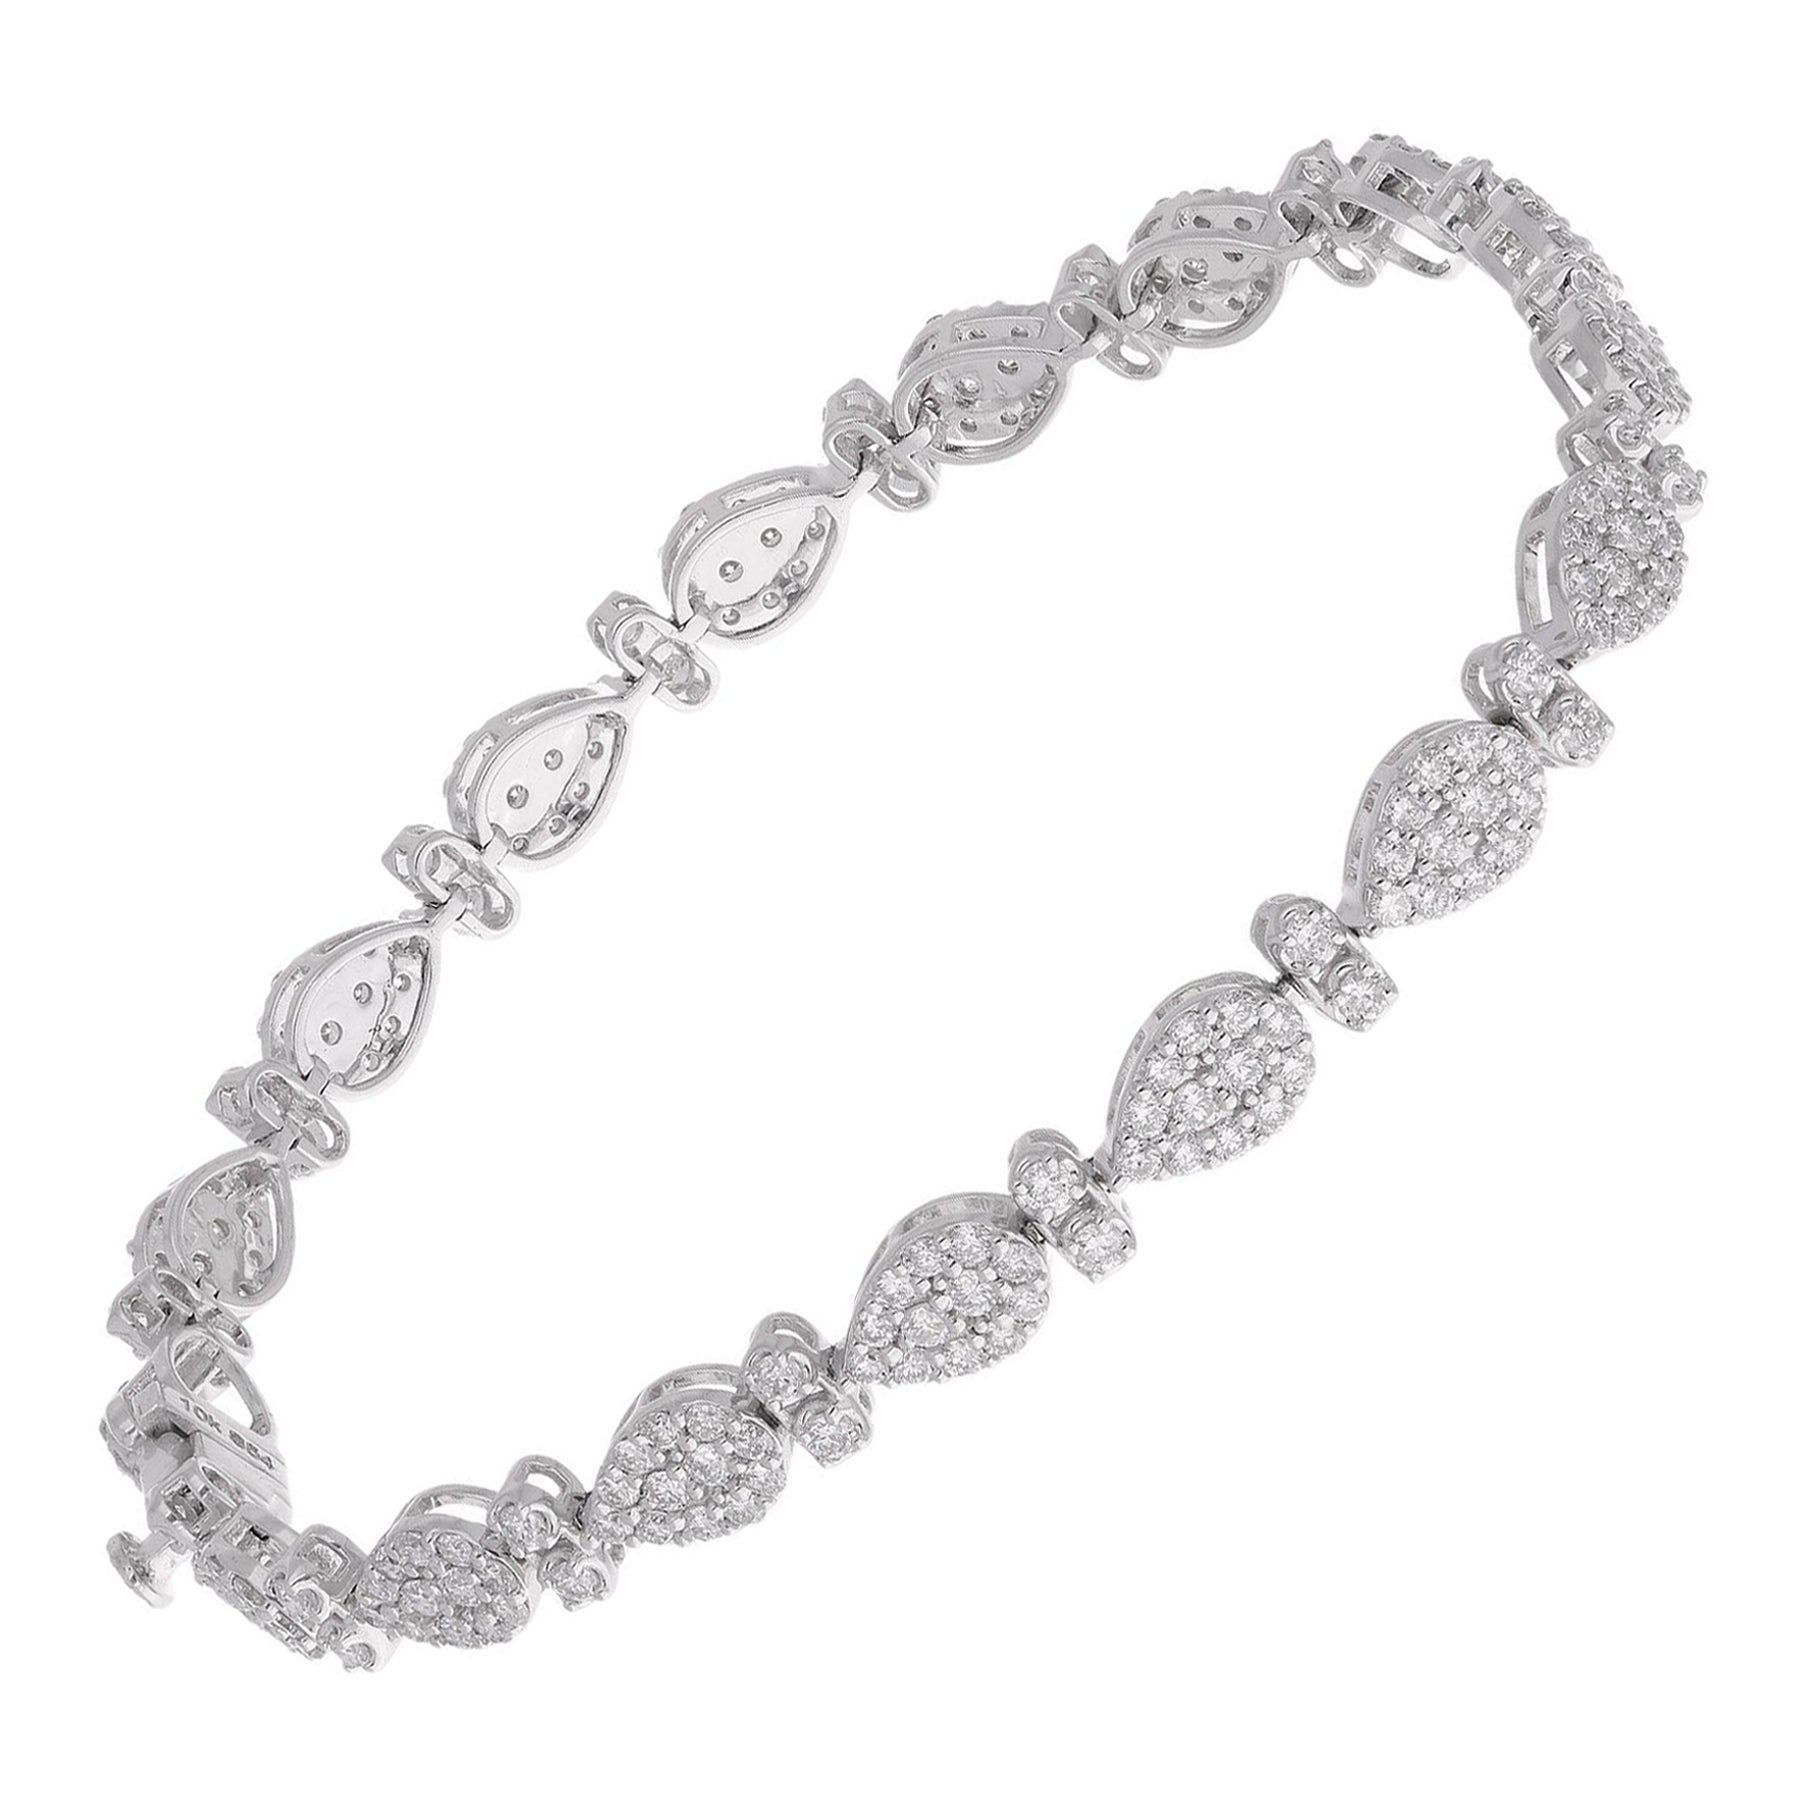 2.9 Carat Diamond Charm Bracelet 10 Karat Solid White Gold Handmade Fine Jewelry For Sale